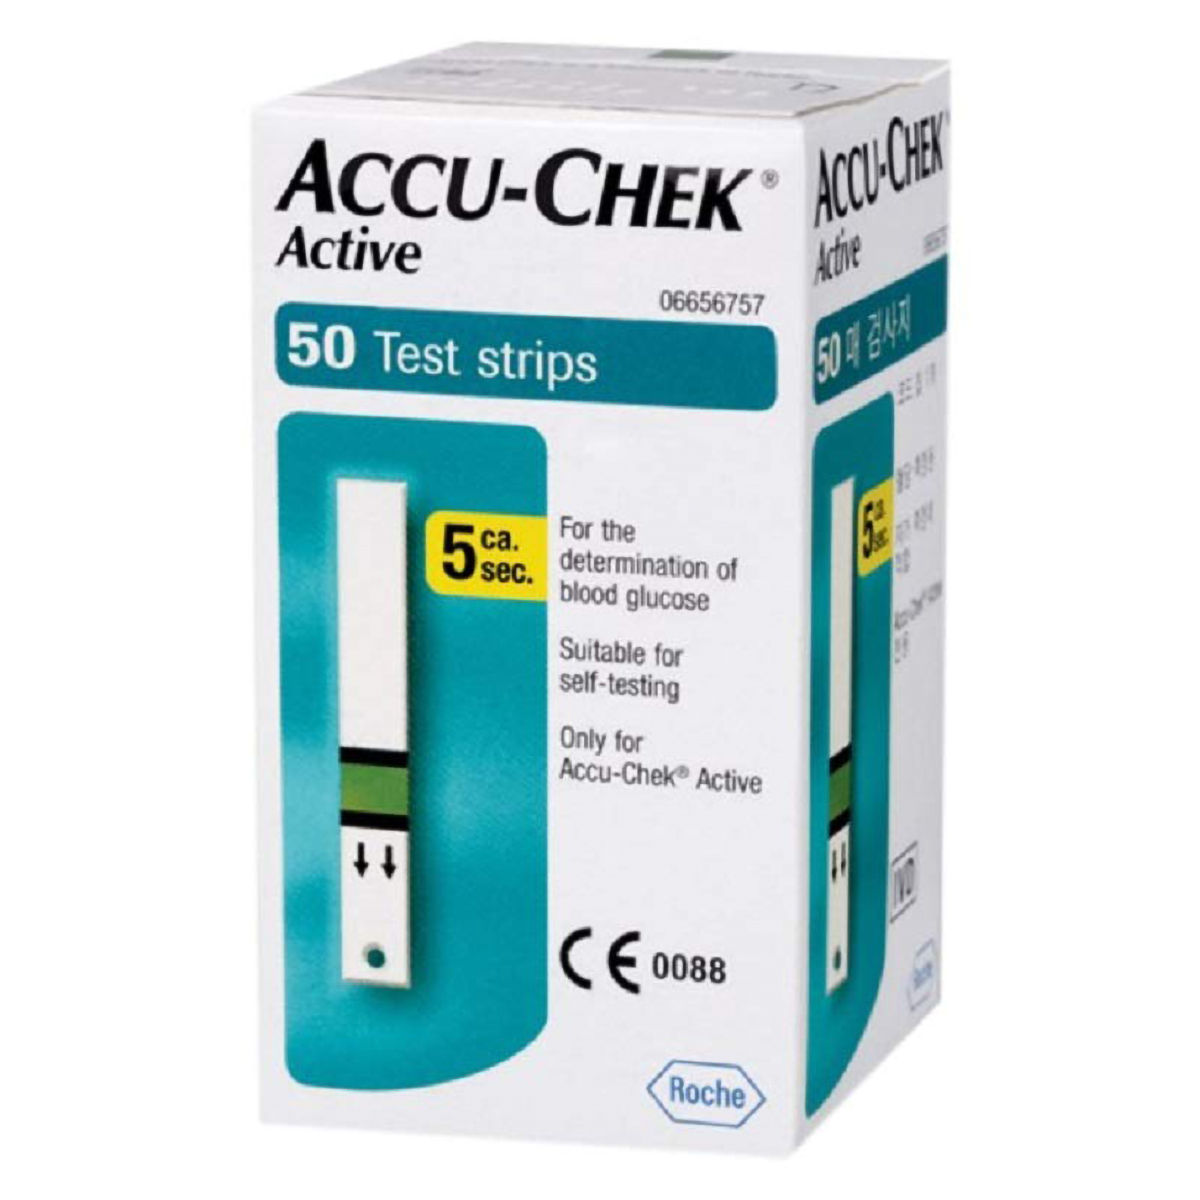 Buy Accu-Chek Active Test Strips, 50 Count Online